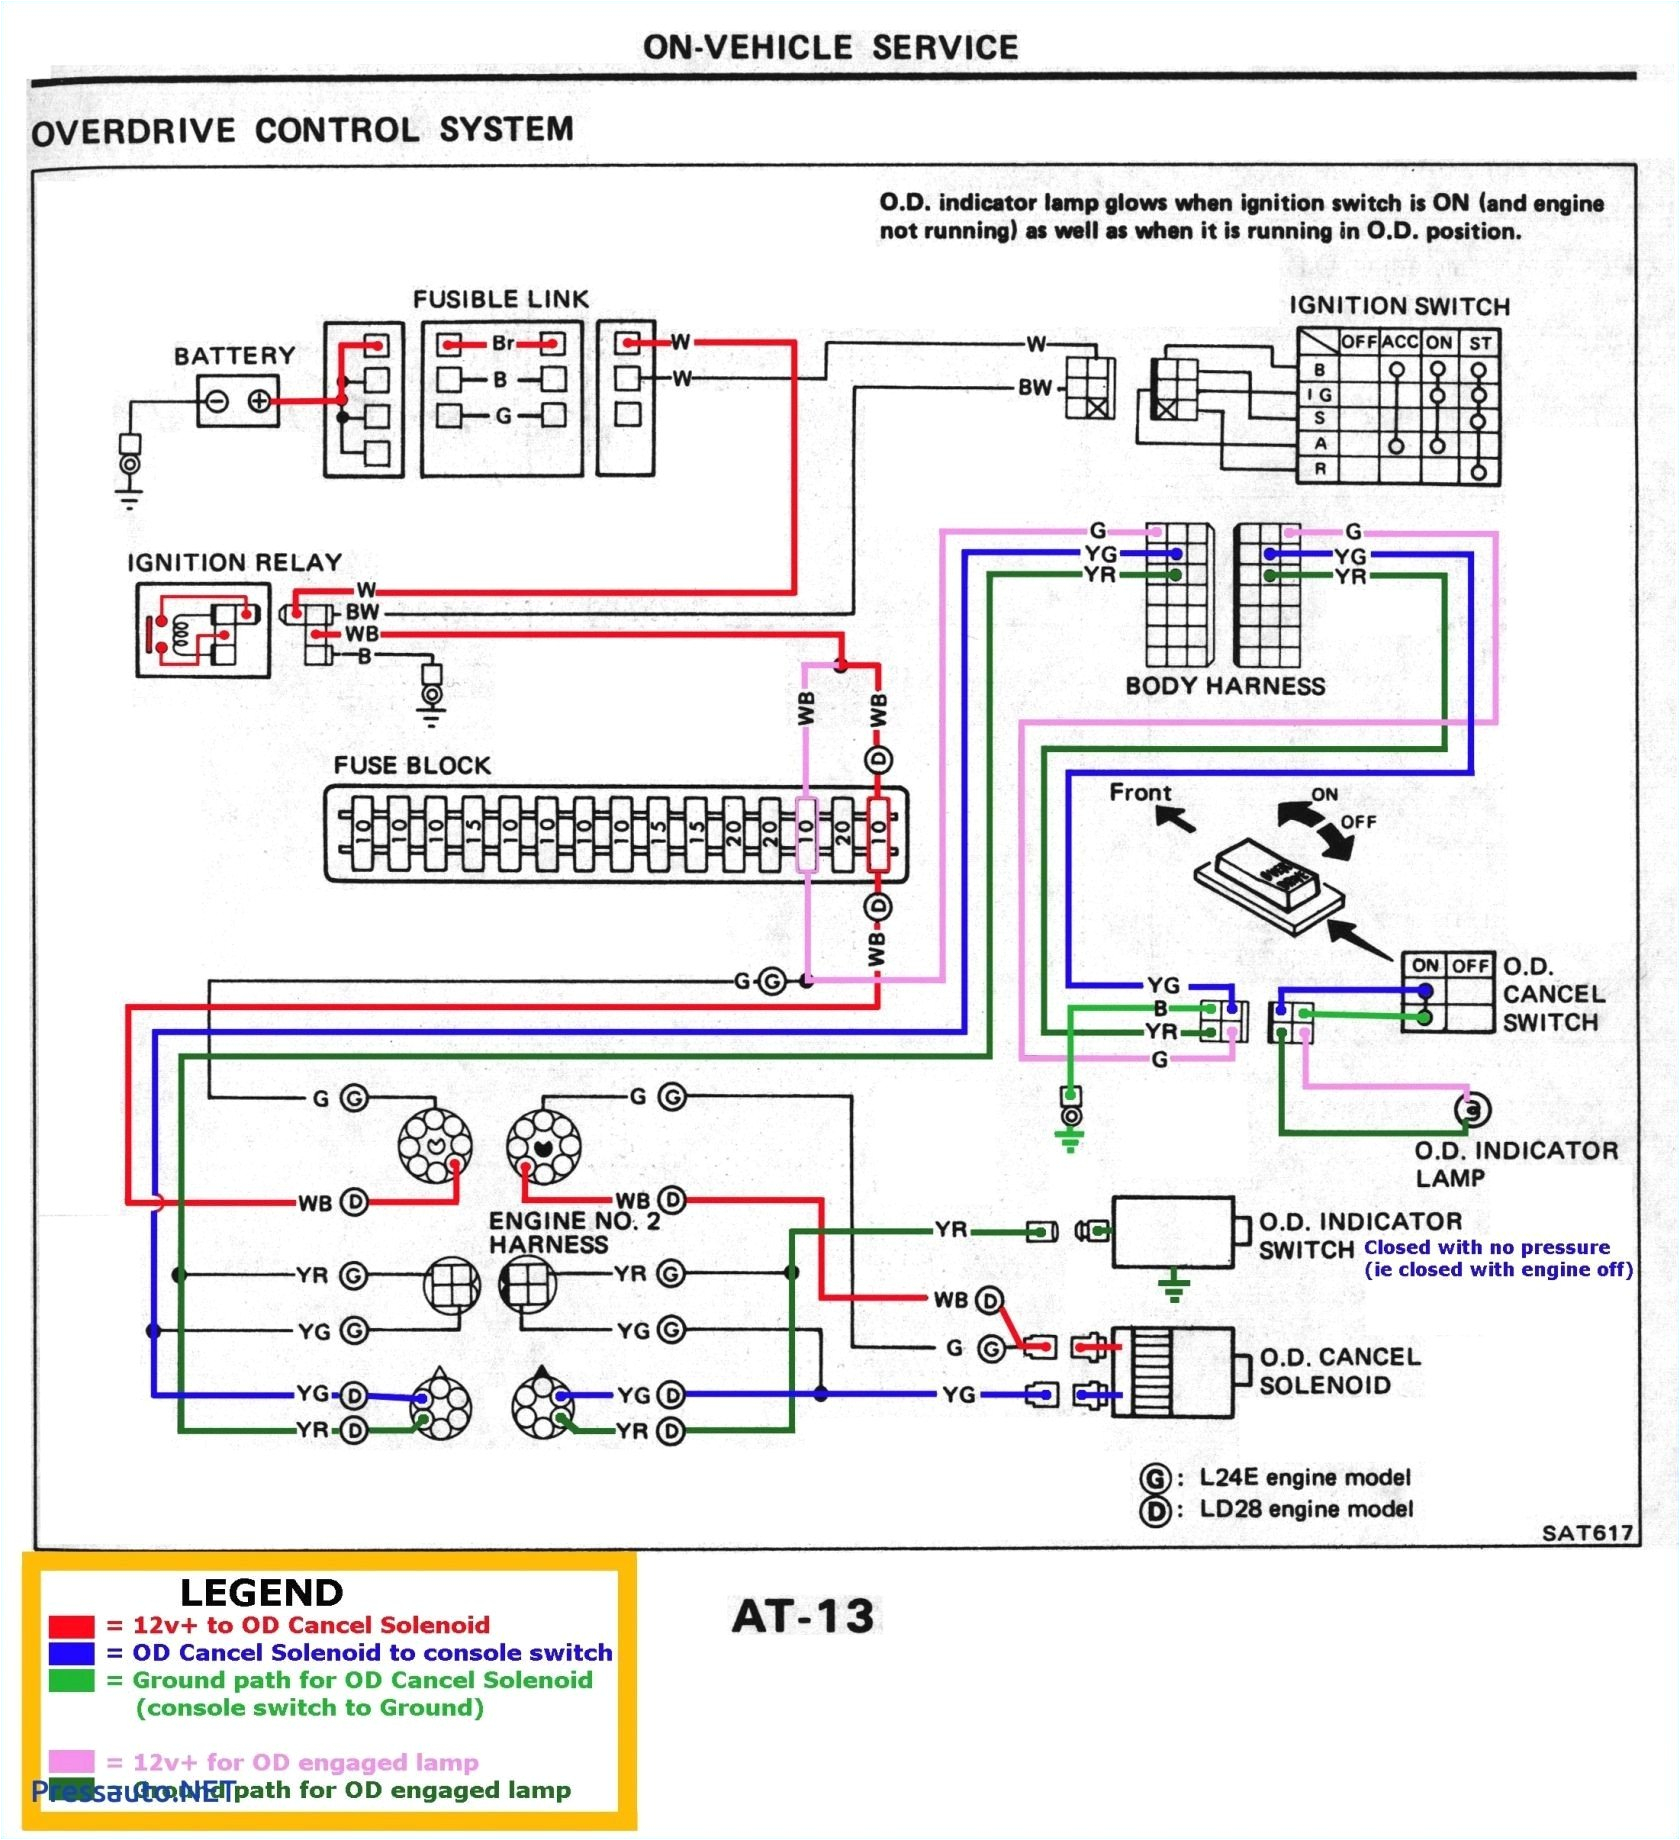 warn winch solenoid wiring diagram atv luxury warn winch solenoid wiring diagram warn winch atv